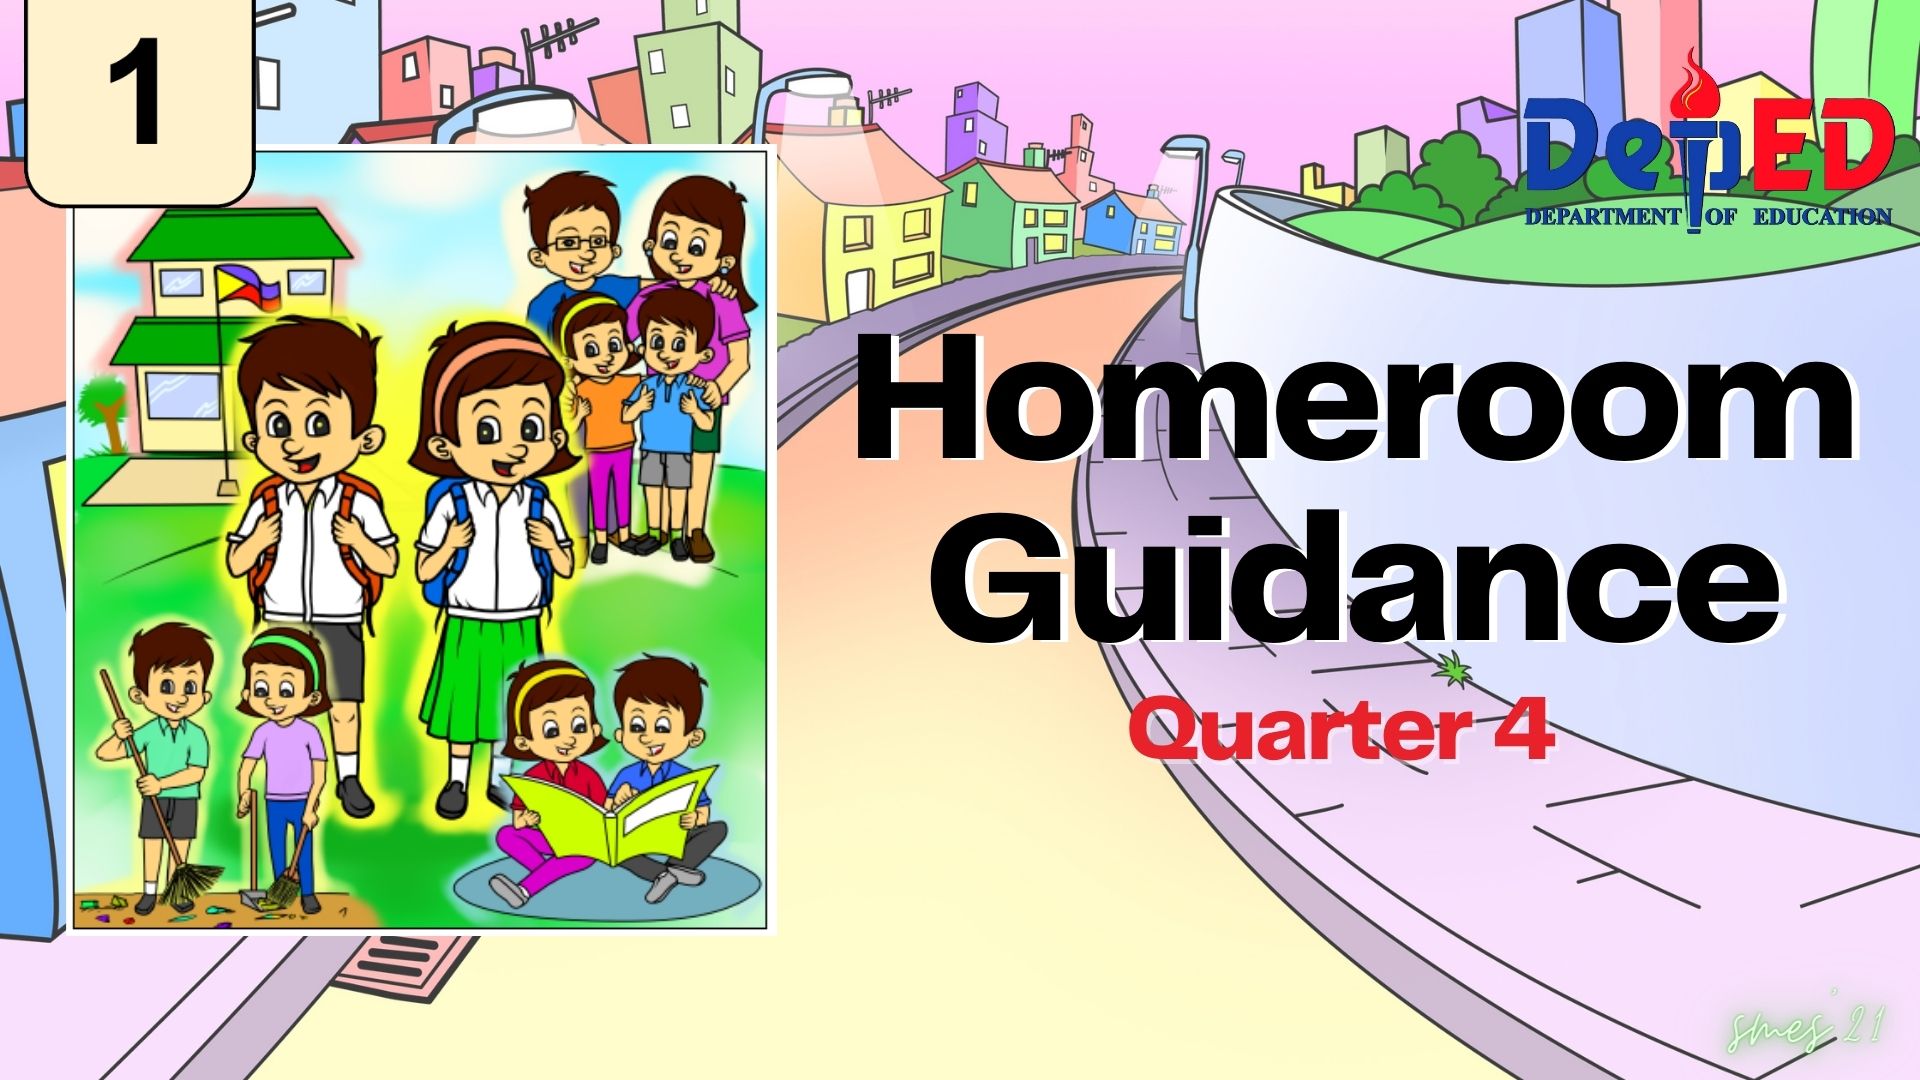 G1 - Homeroom Guidance Quarter 4 Jinky Alzate